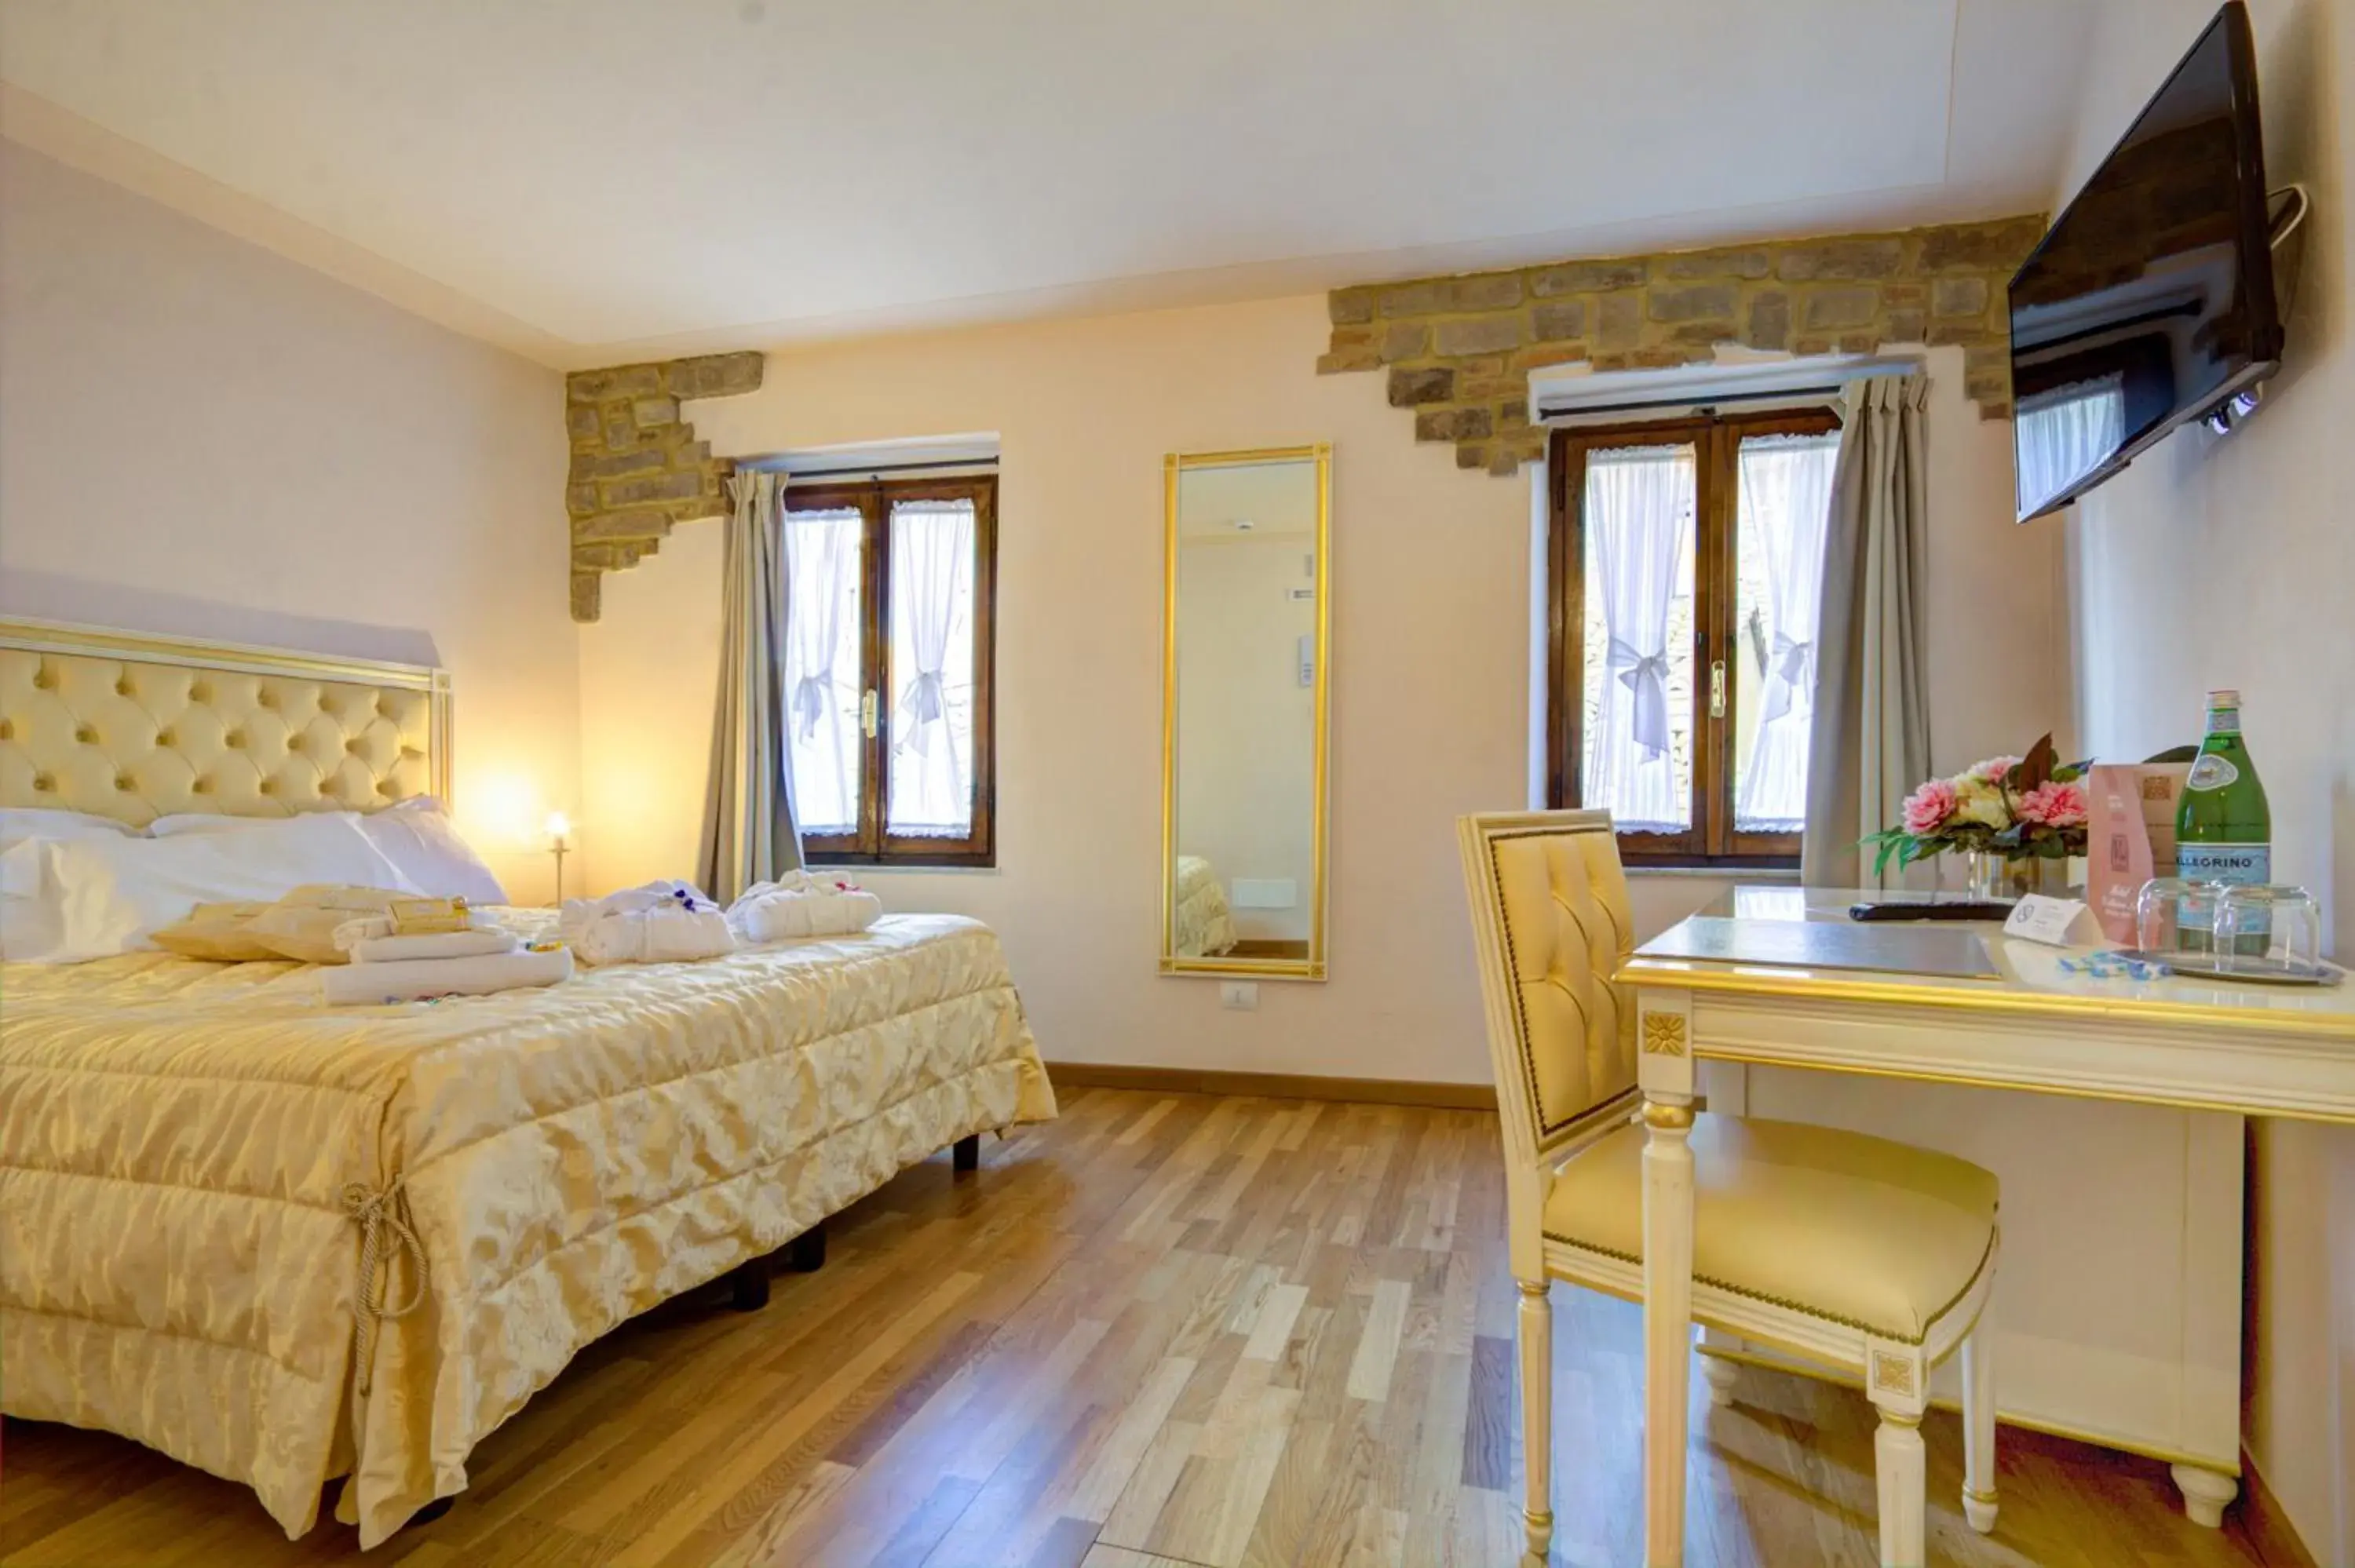 Bed in Hotel Volterra In